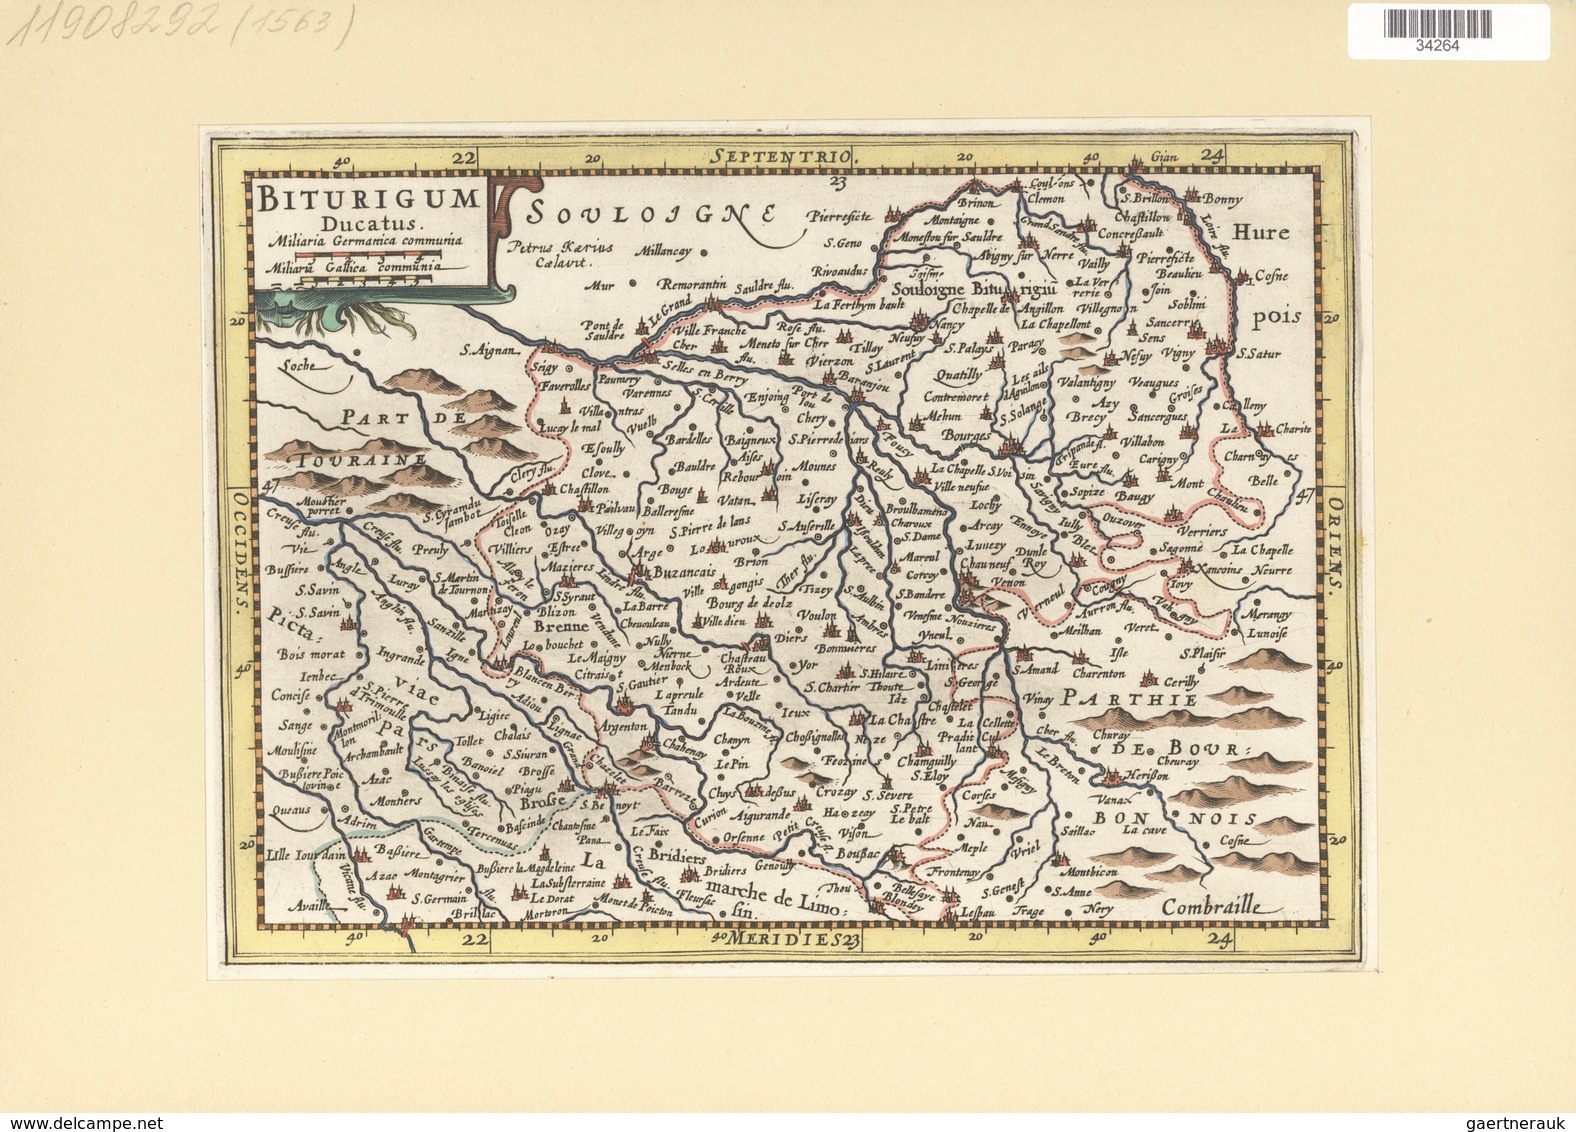 Landkarten Und Stiche: 1734. Biturigum Dicatus. From The Mercator Atlas Minor Ca 1648, Later Altered - Geographie